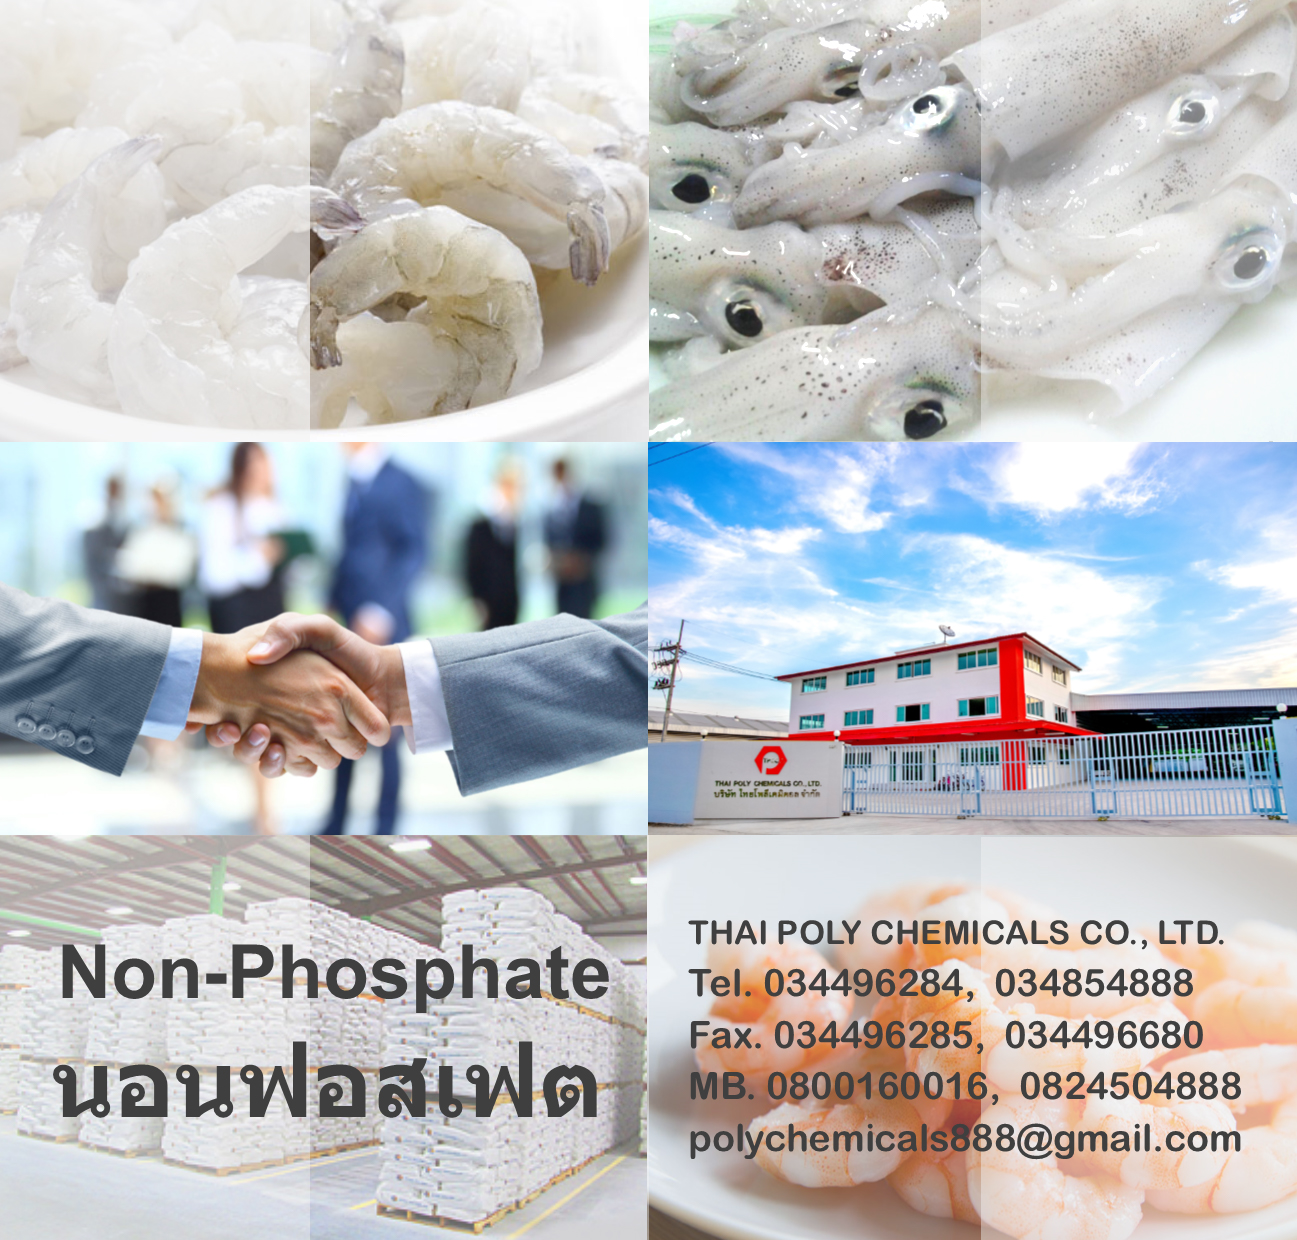 Non-Phosphate, นอนฟอสเฟต, Seafood additive, สารเพิ่มน้ำหนักกุ้ง, สารเพิ่มน้ำหนักหมึก, สารเพิ่มน้ำหนักปลา รูปที่ 1